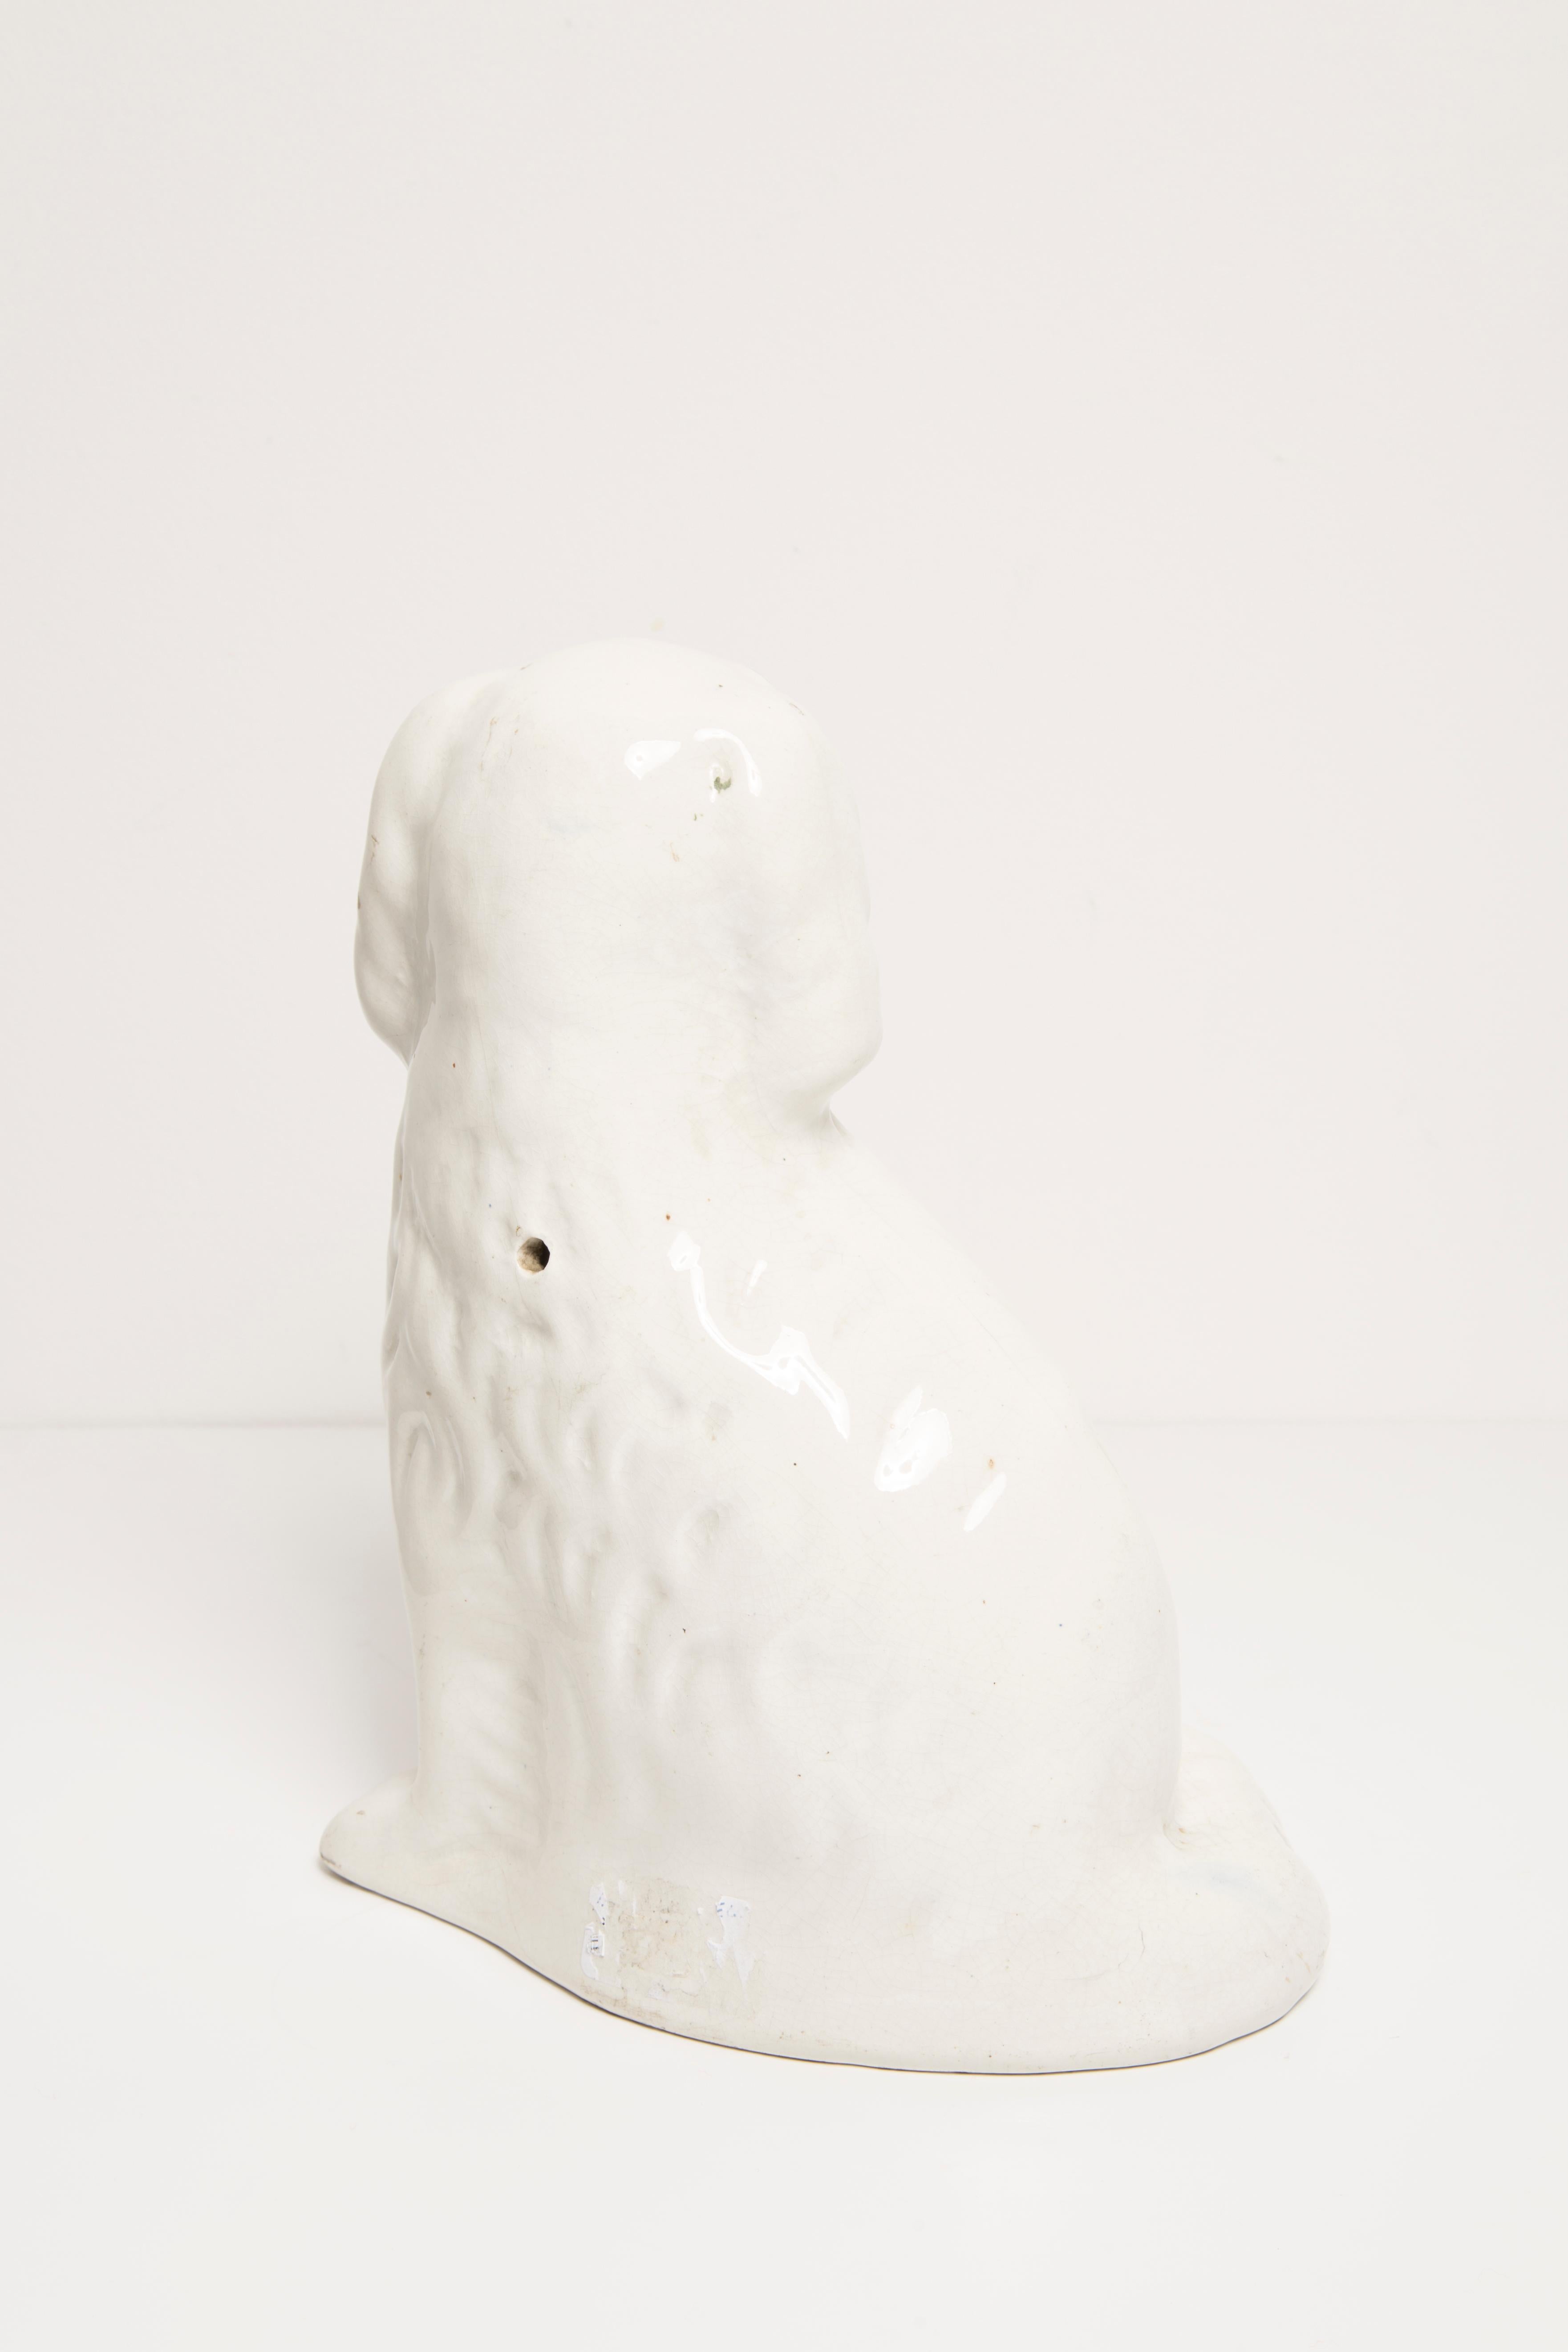 Ceramic Mid Century White Spaniel Dog Sculpture Staffordshire England, 1960s For Sale